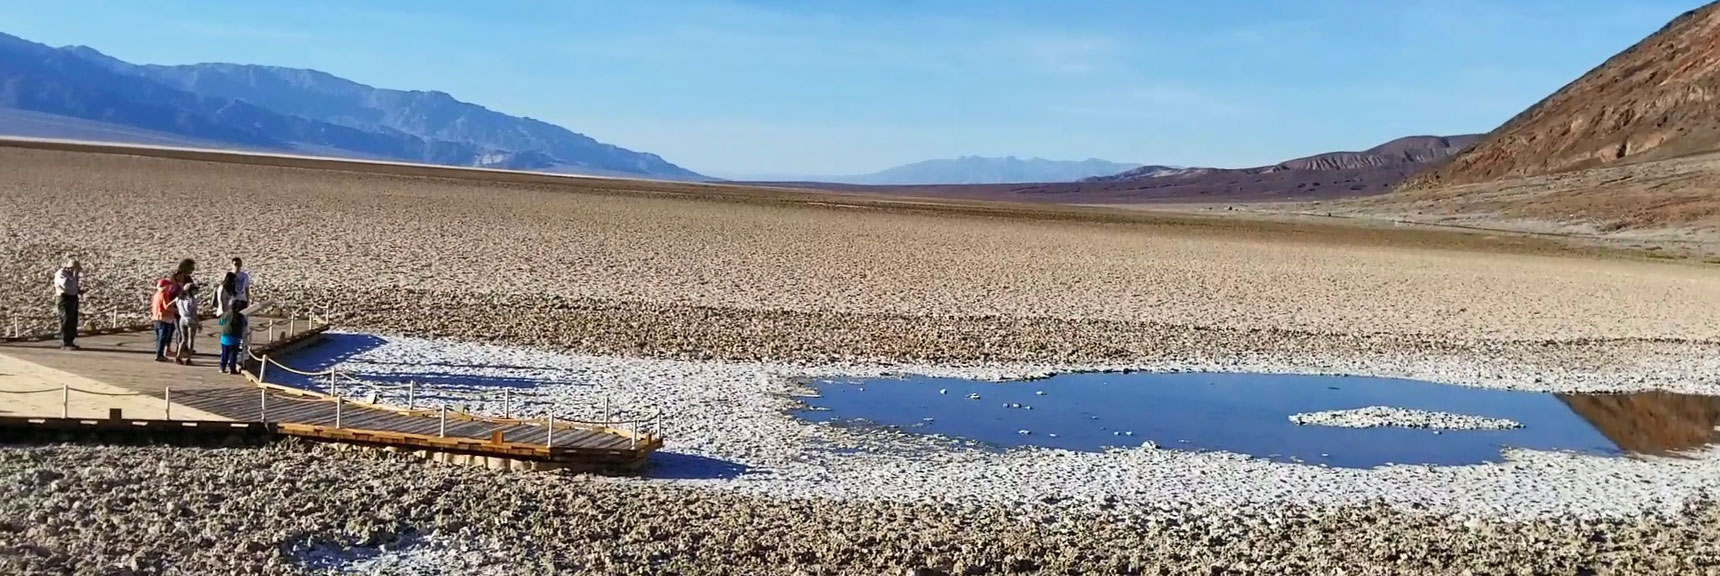 Death Valley National Park Bad Water Basin November 24th 2018